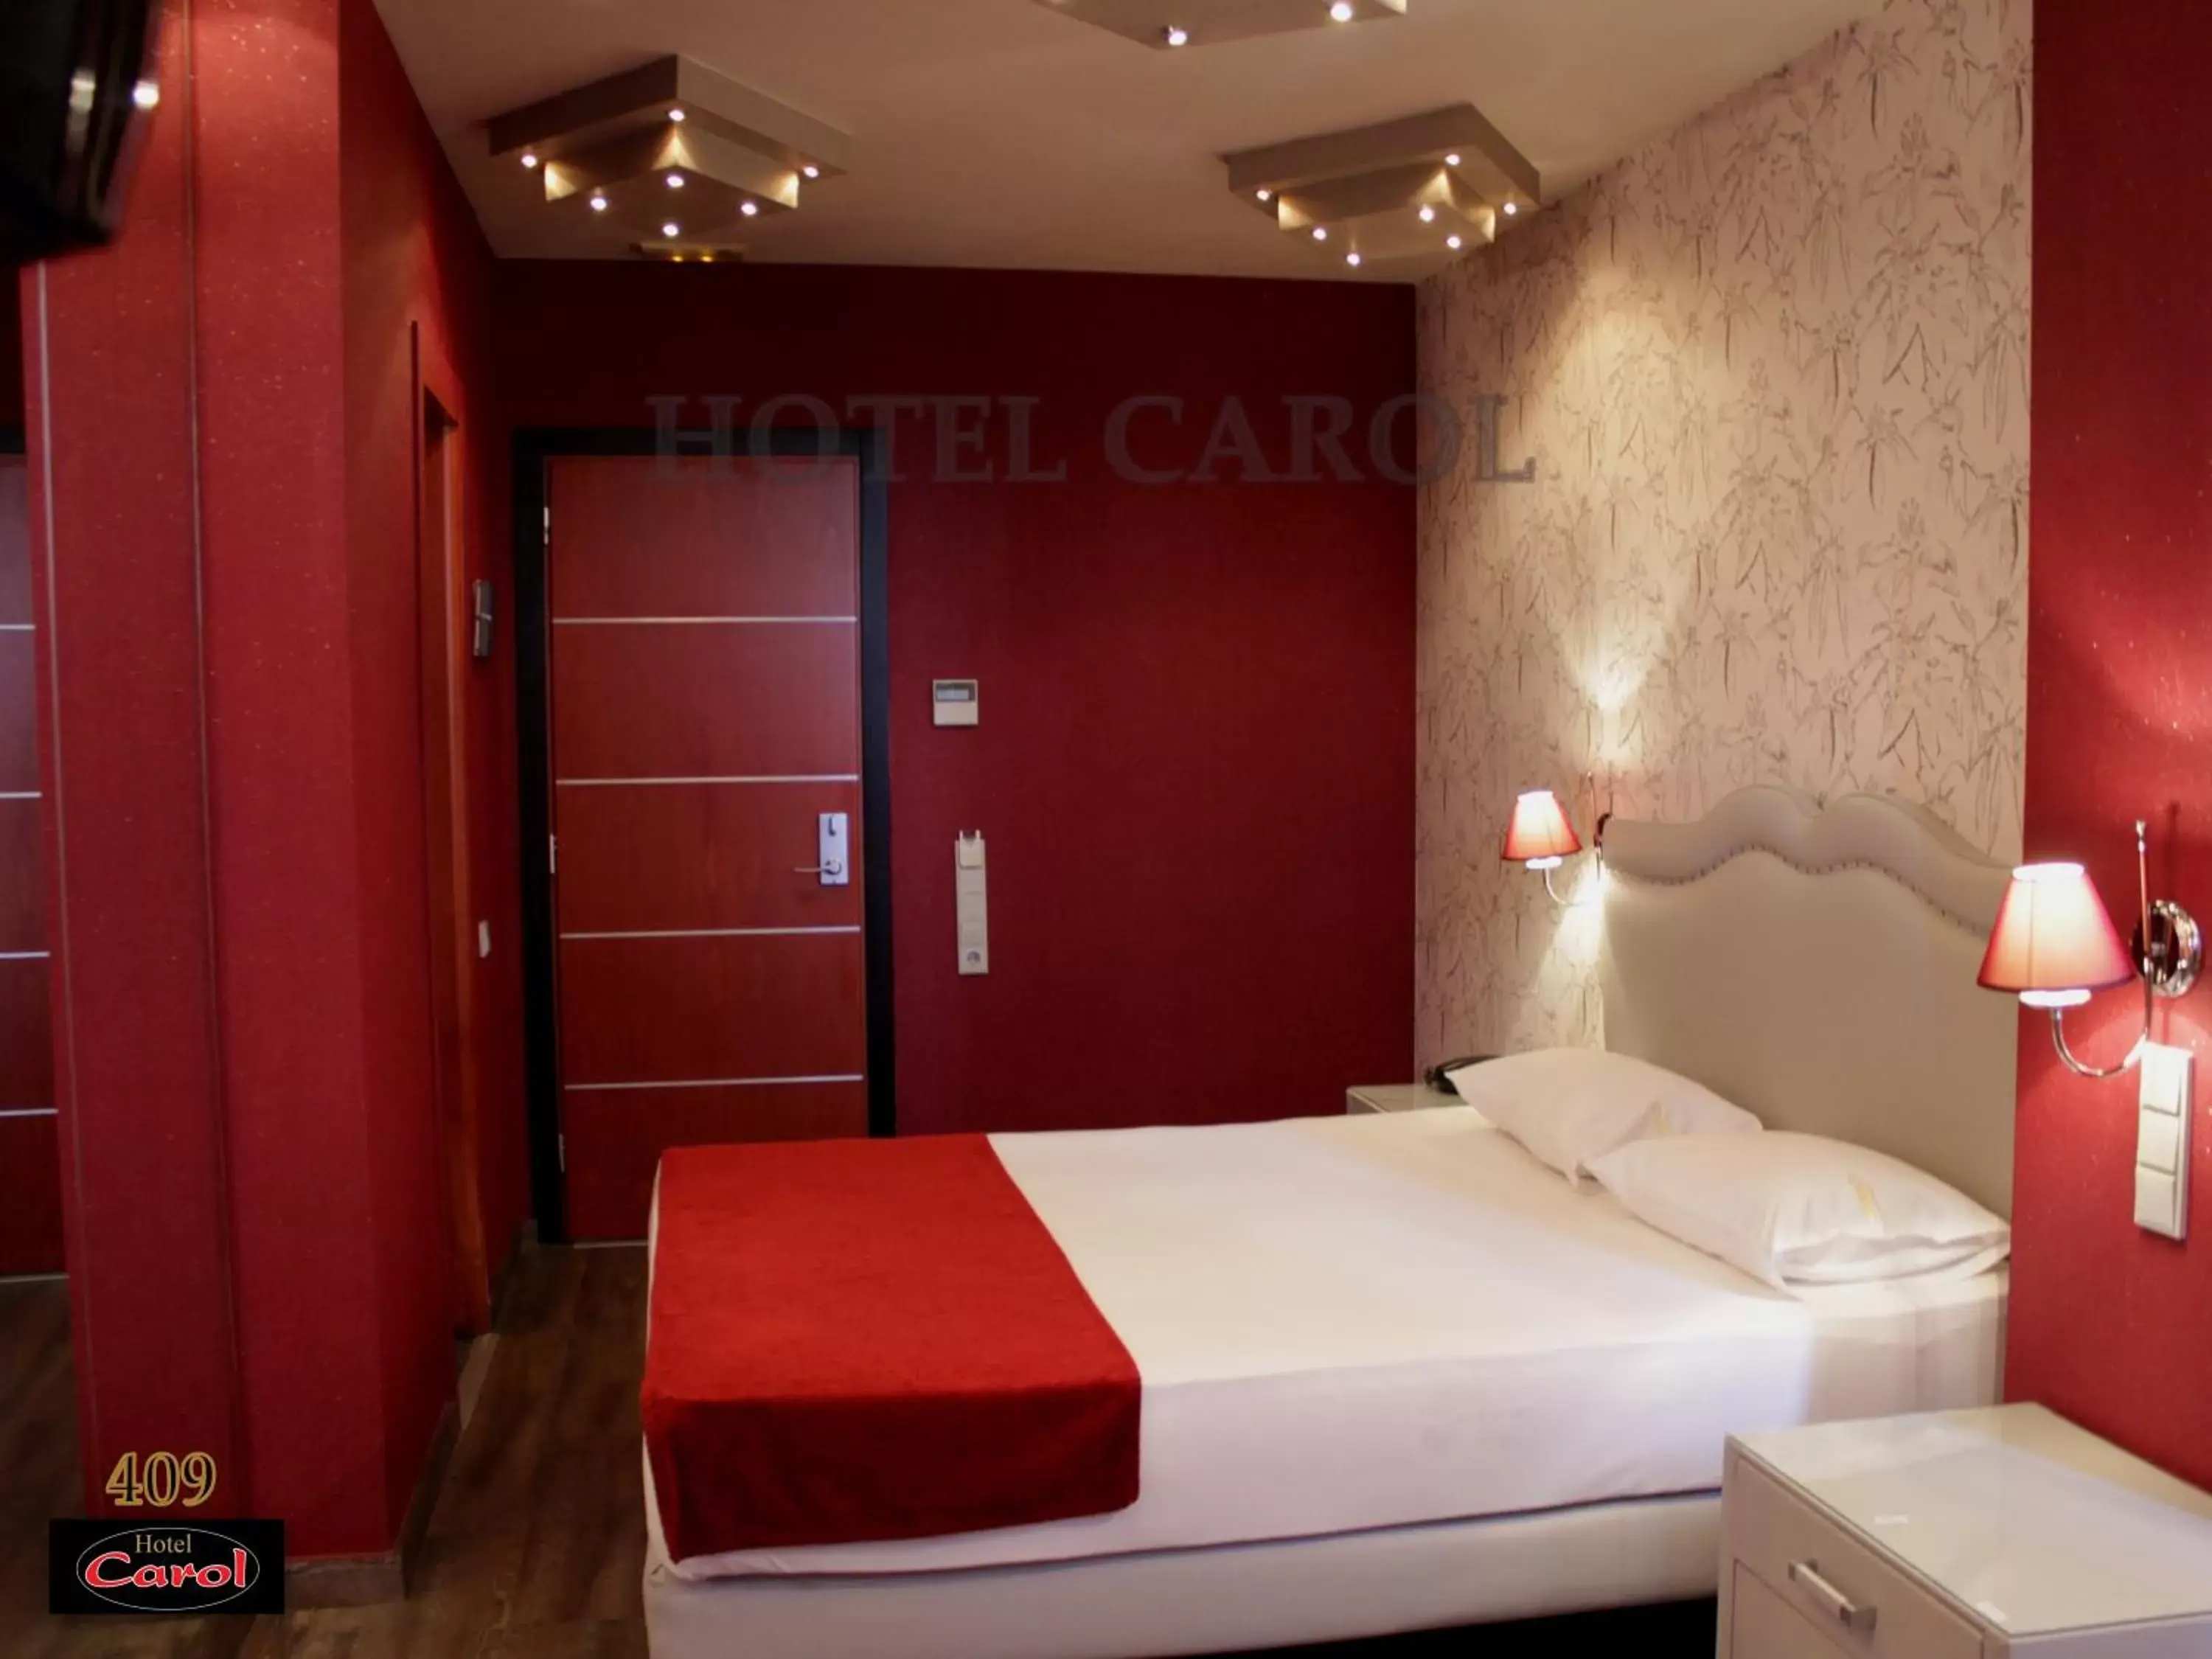 Shower, Bed in Carol Hotel